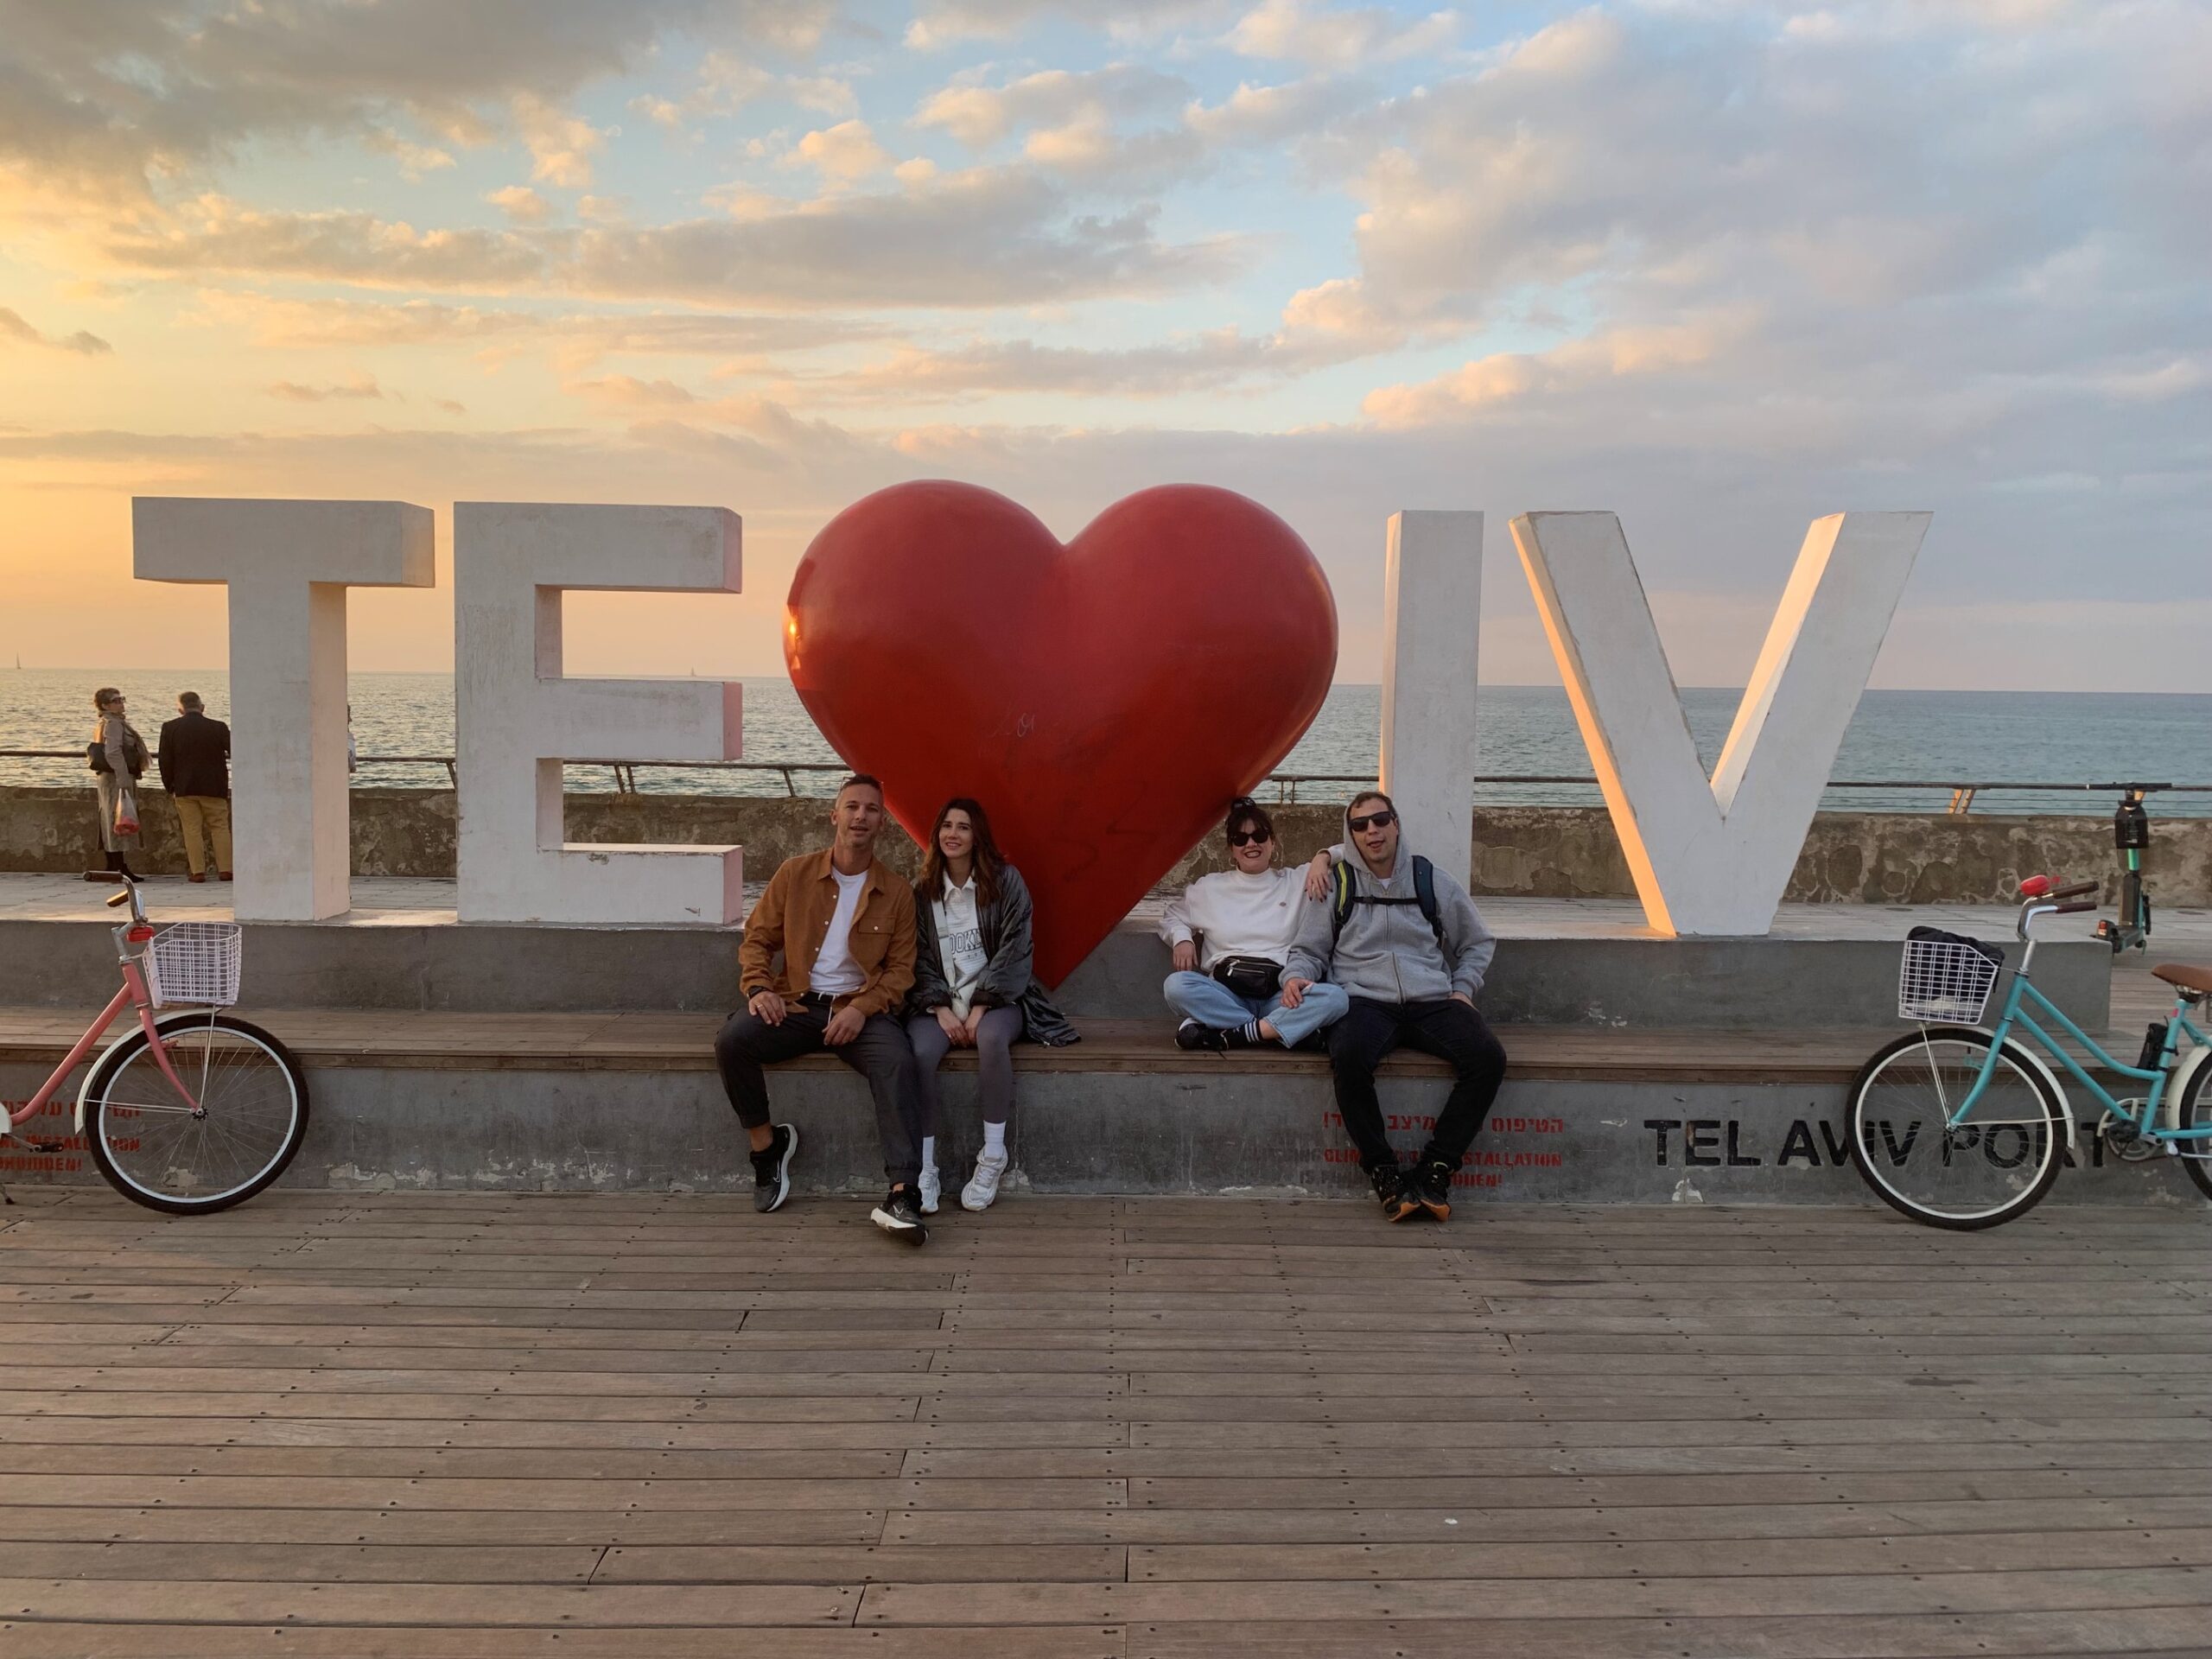 Tel Aviv/ Tελ Αβίβ